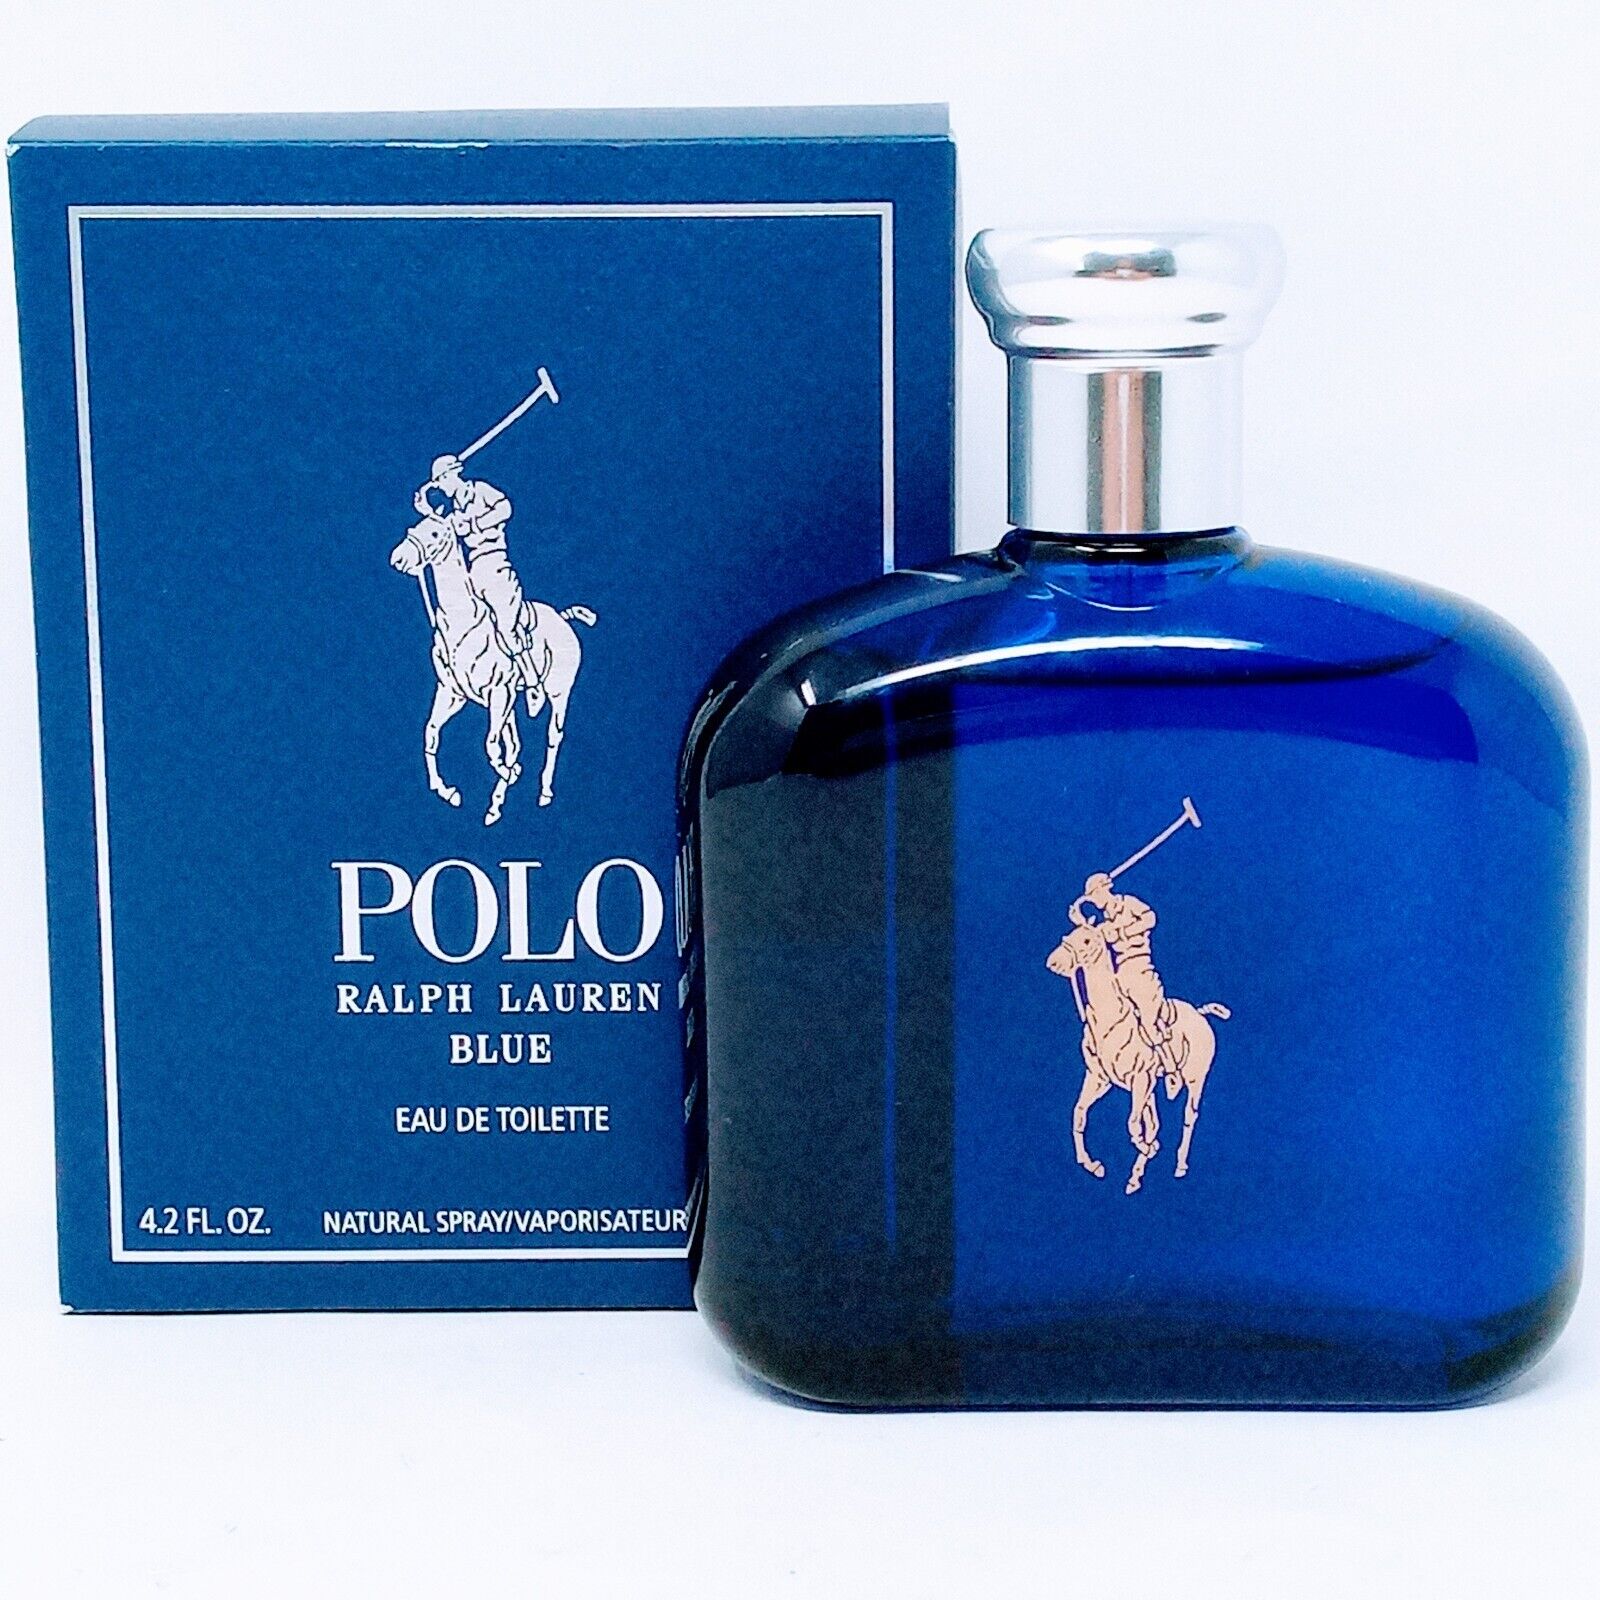 Polo Blue by Ralph Lauren 4.2 oz / 125ml EDT Spray Cologne For Men NEW & SEALED